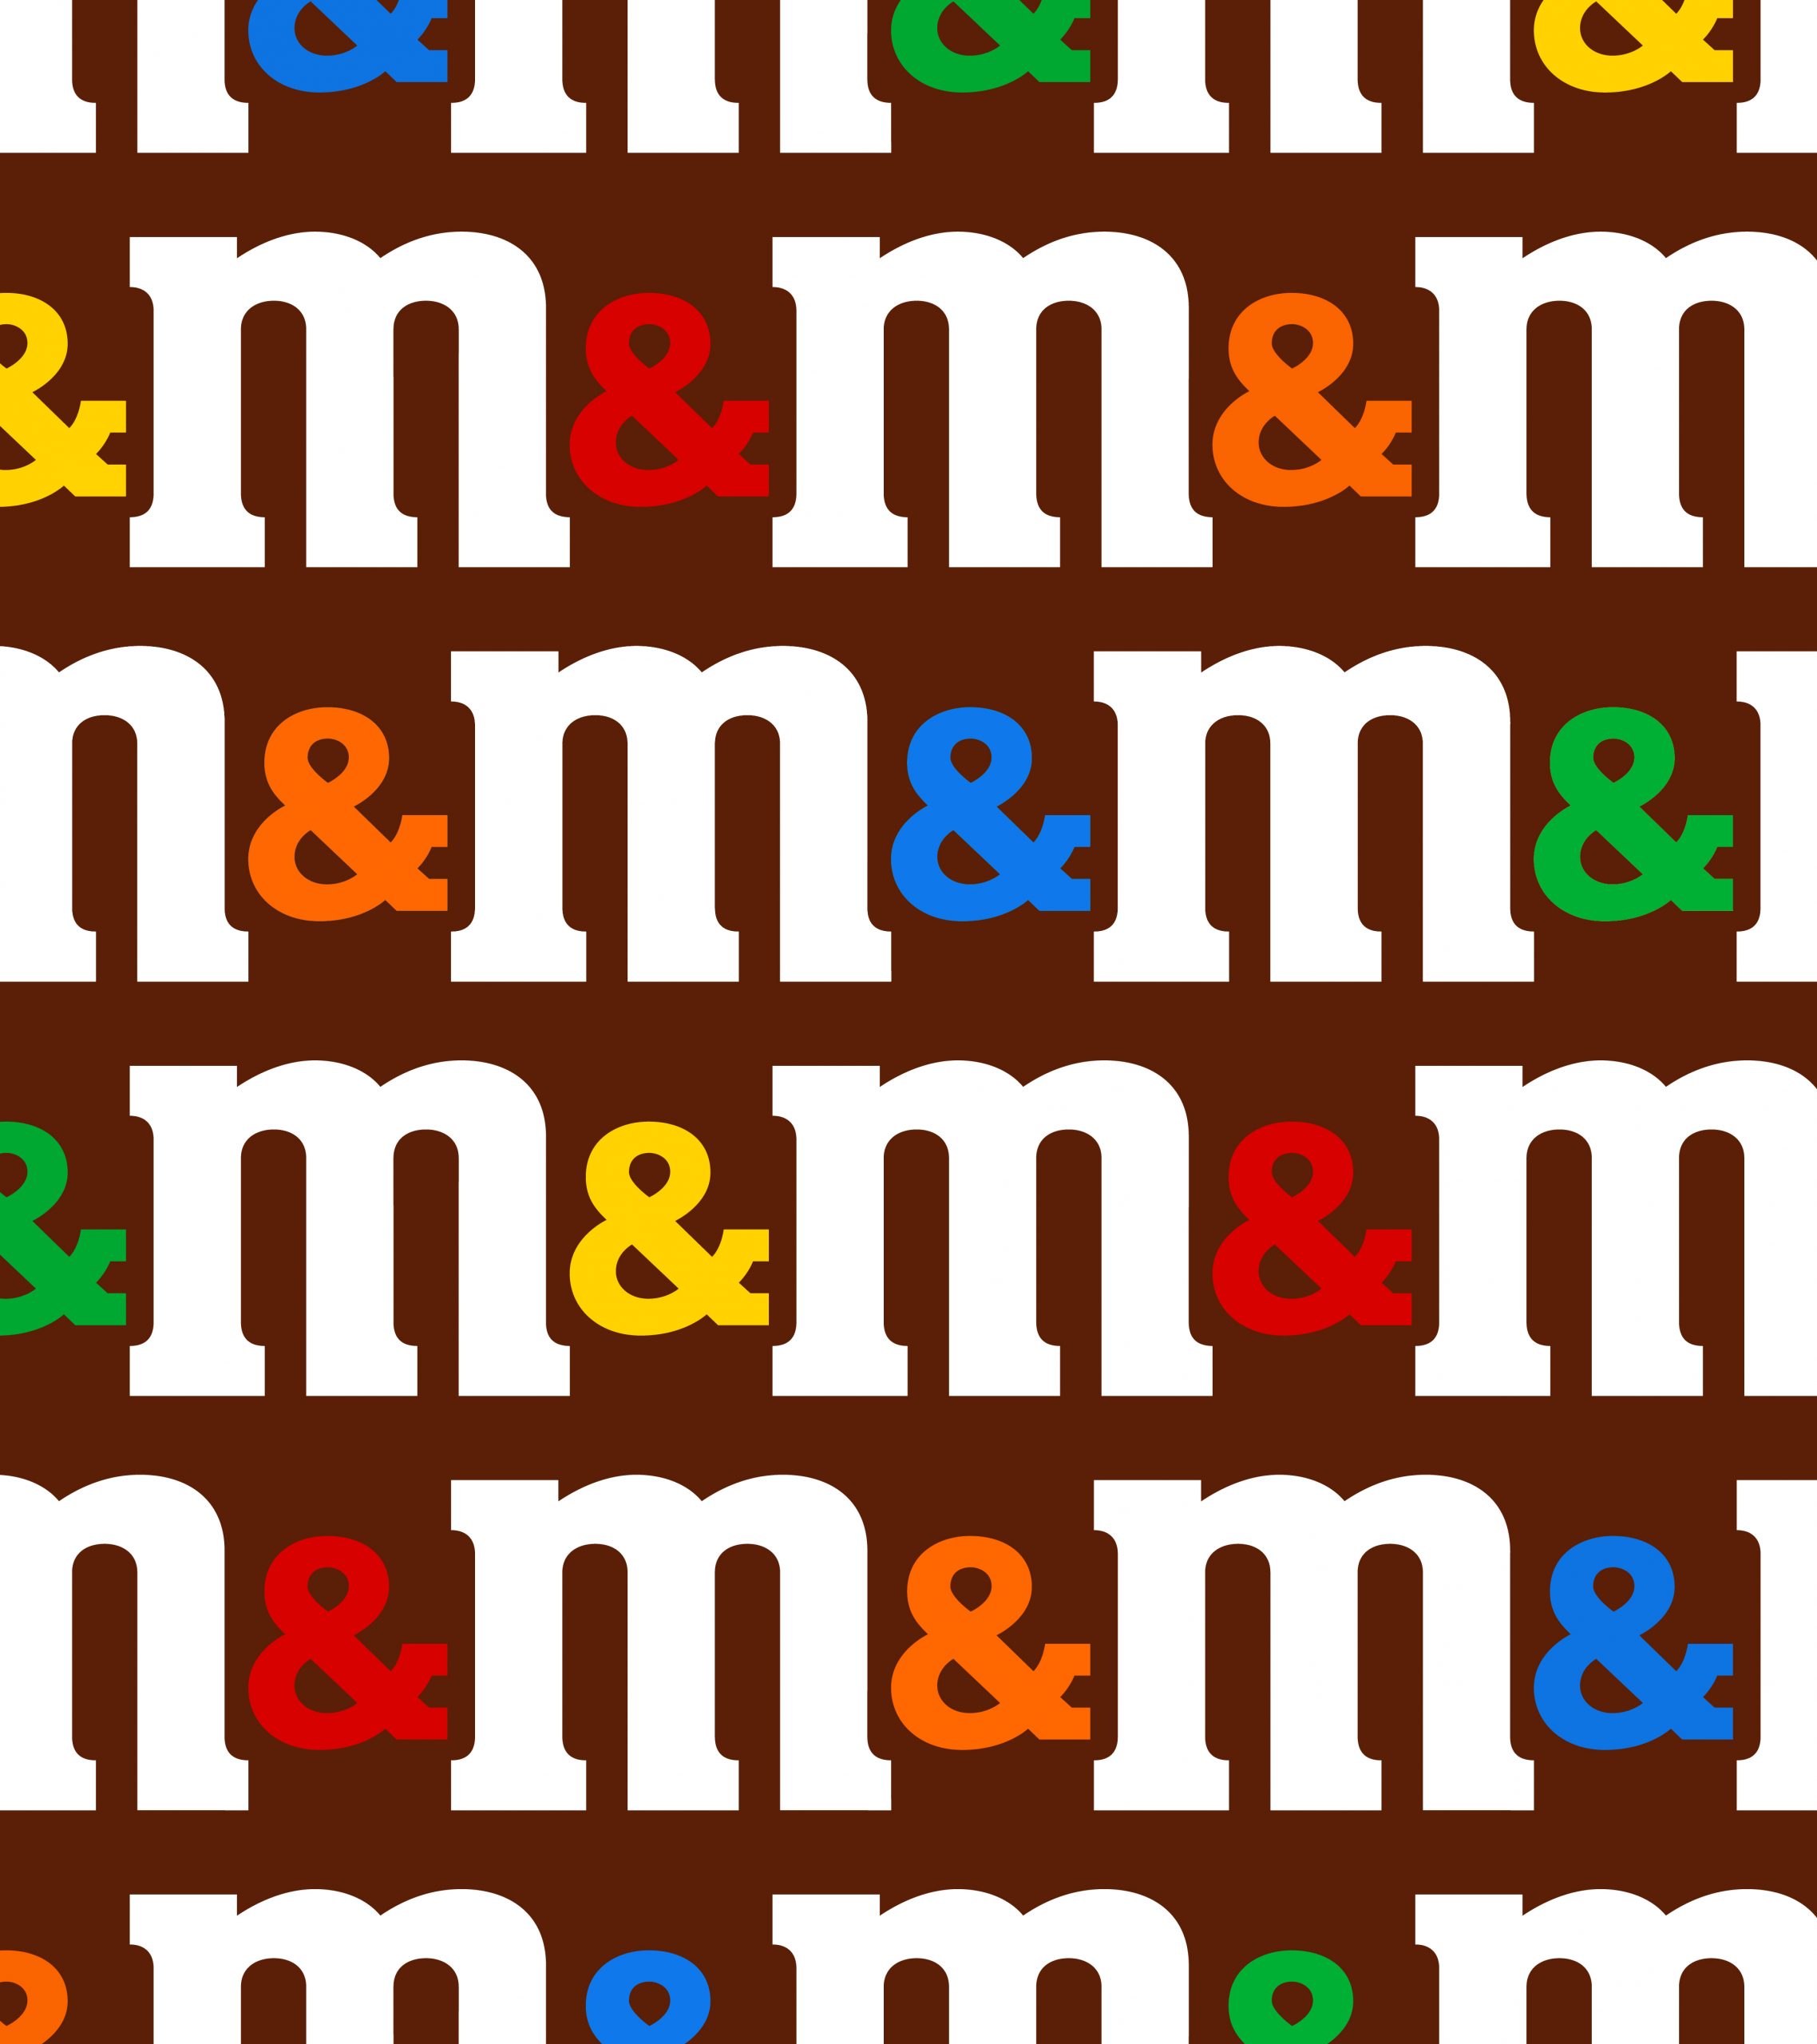 M&M's switch to Ma&Ya's is branding genius